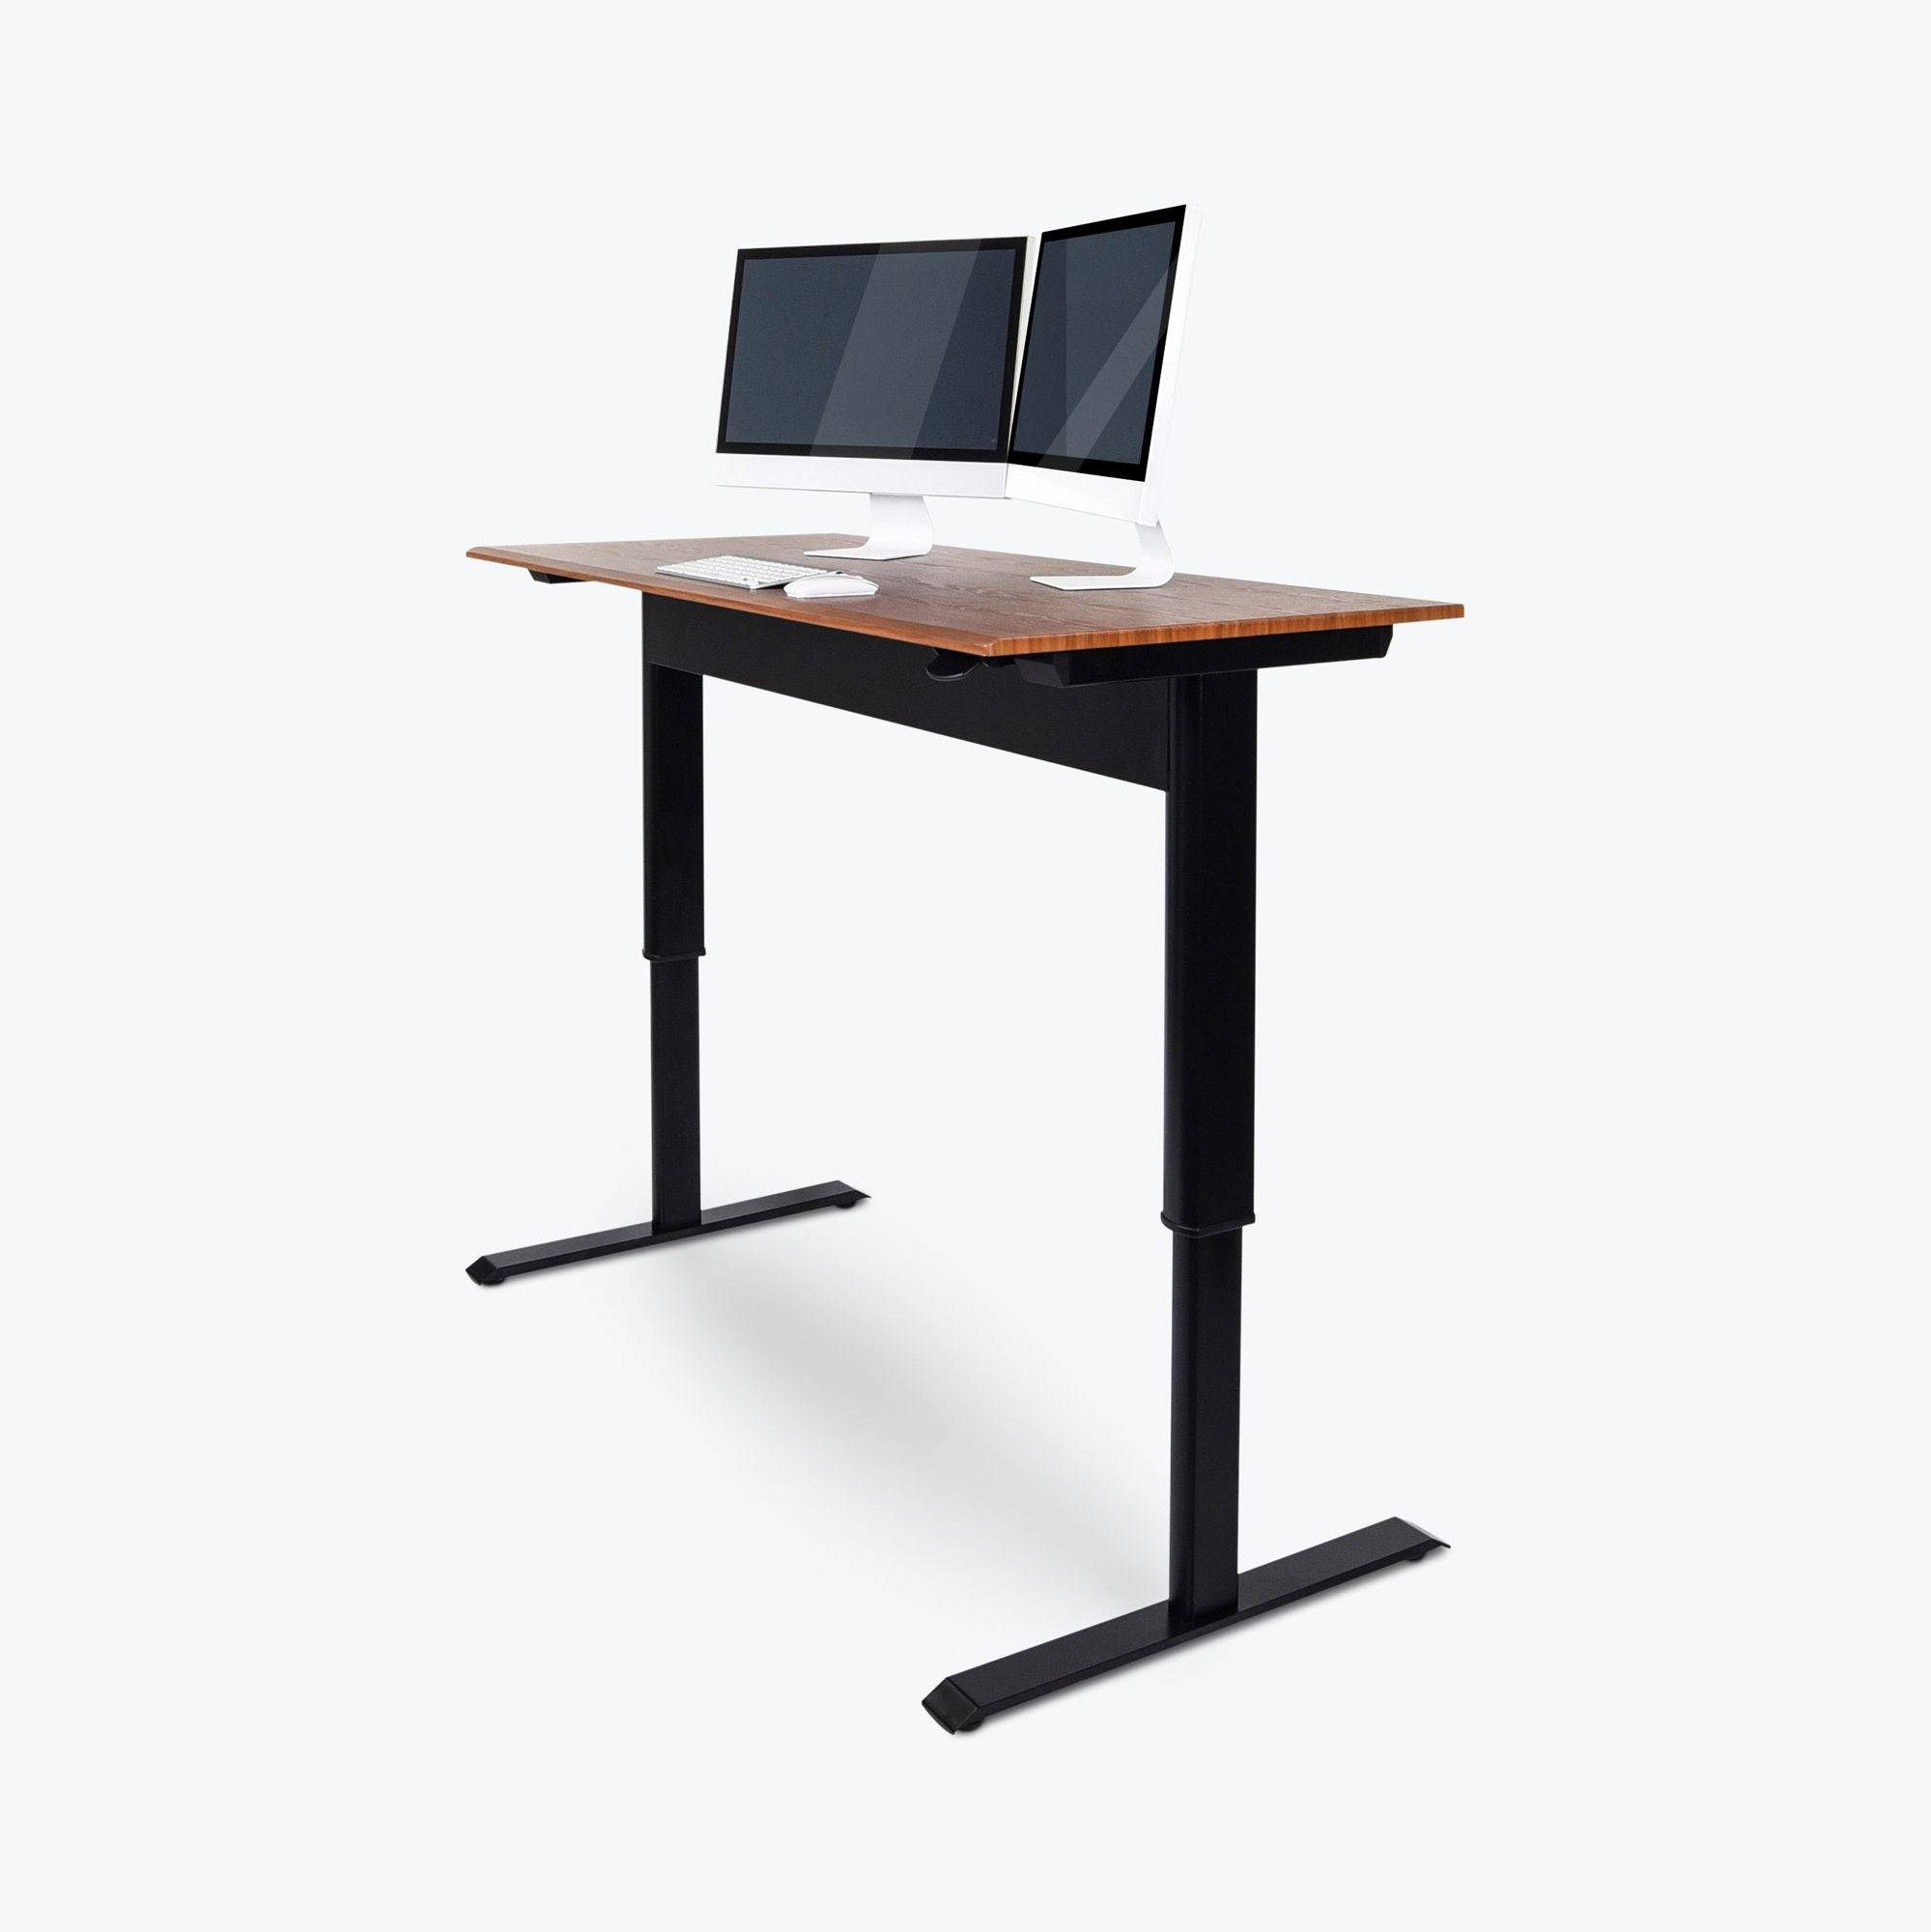 Luxor 56" Pneumatic Adjustable Height Standing Desk 56"W x 29.5"D x 27.5" to 44.5"H (Black/Teak) - SPN56F-BK/TK